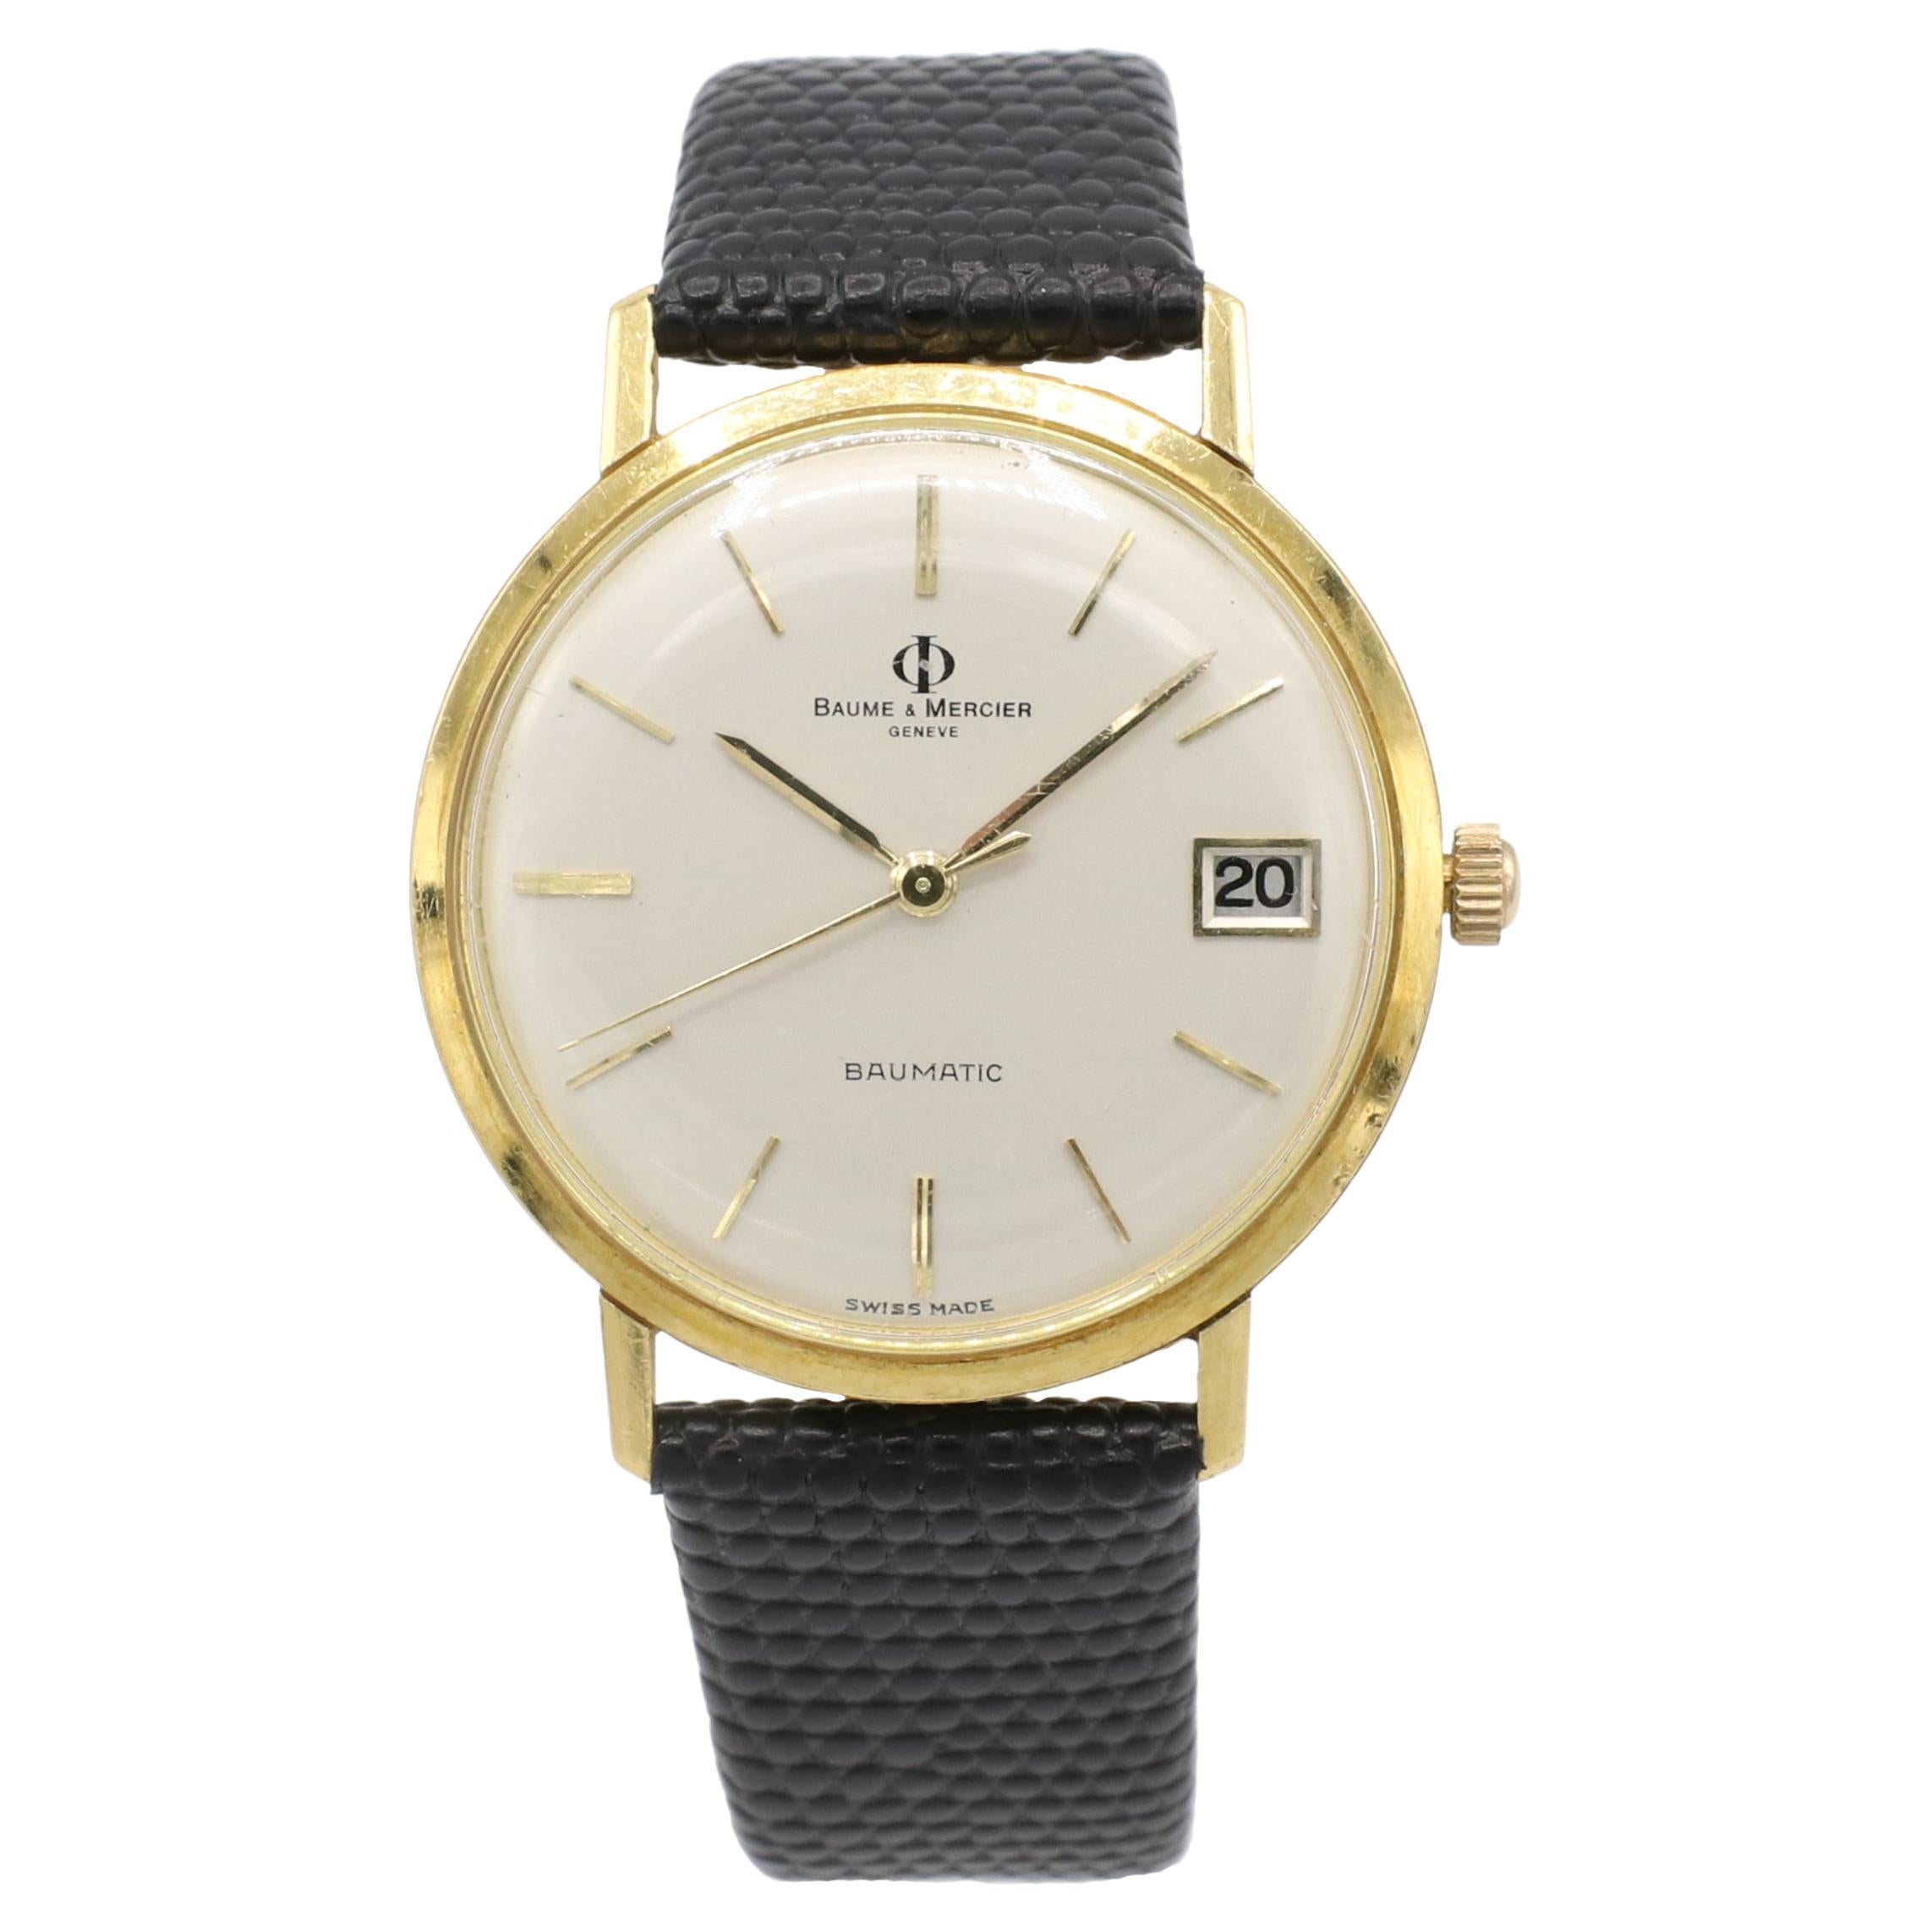 Vintage Baume & Mercier Baumatic  18 Karat Yellow Gold Leather Strap Wrist Watch